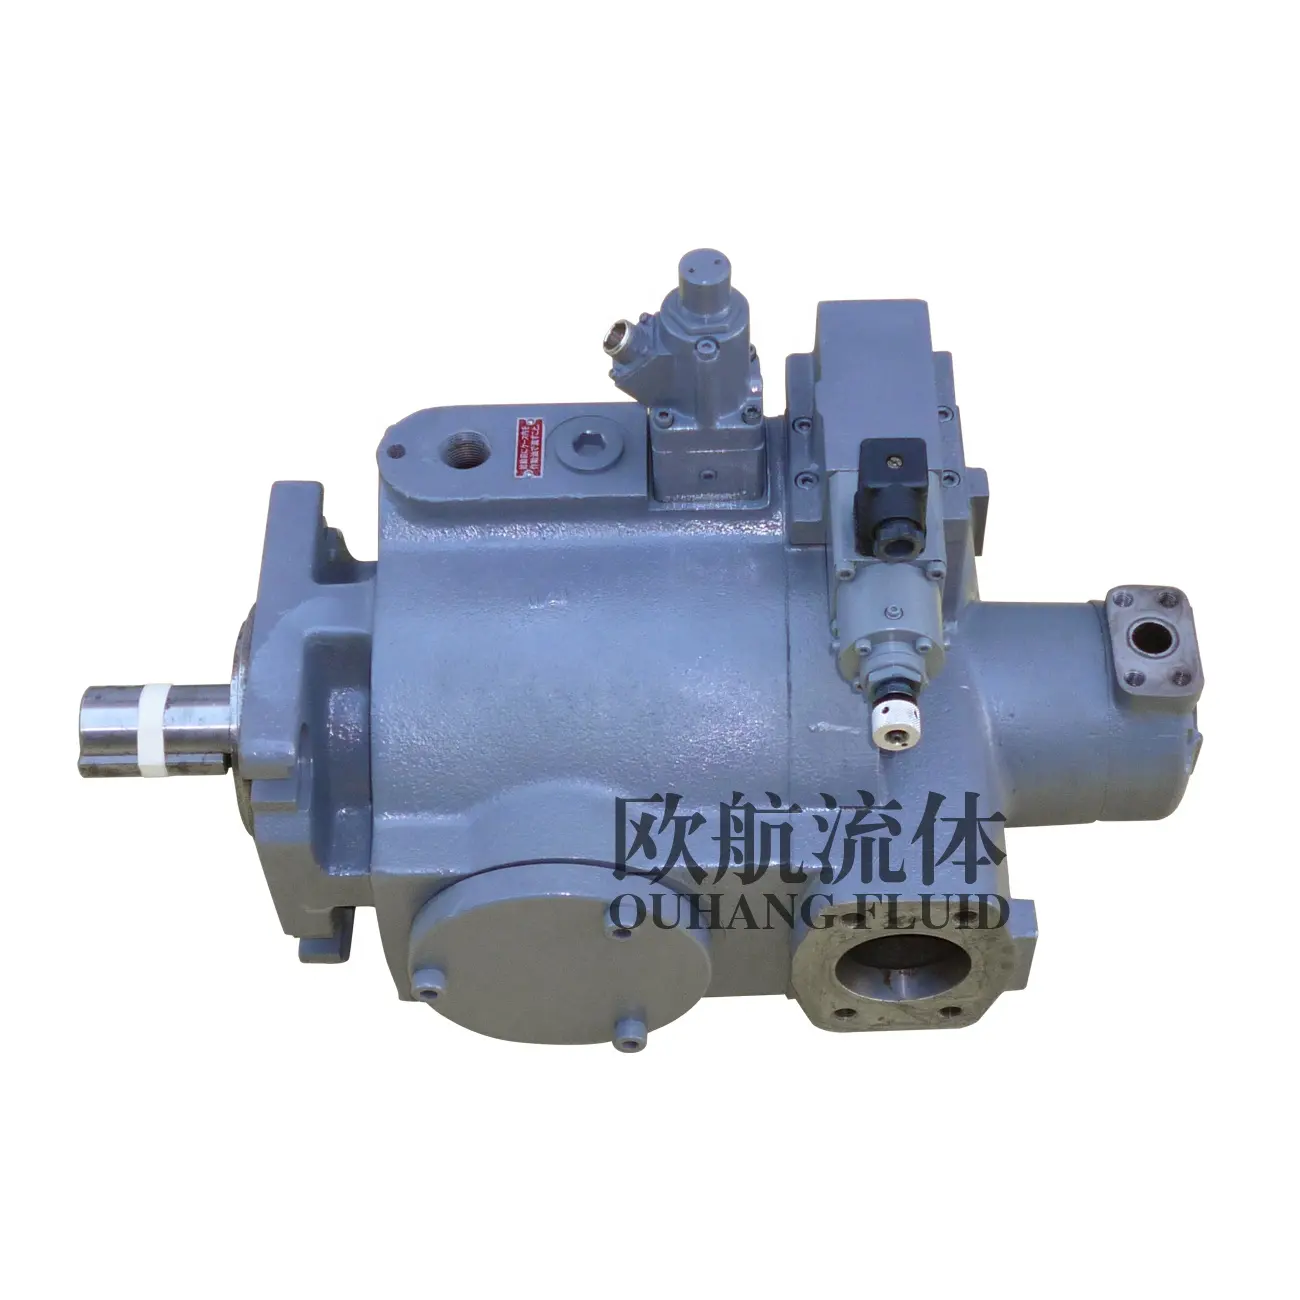 Tokimec pompa idraulica p100v3r76- 2a10- edqs- 10- j- s84 variabile pompa a stantuffo